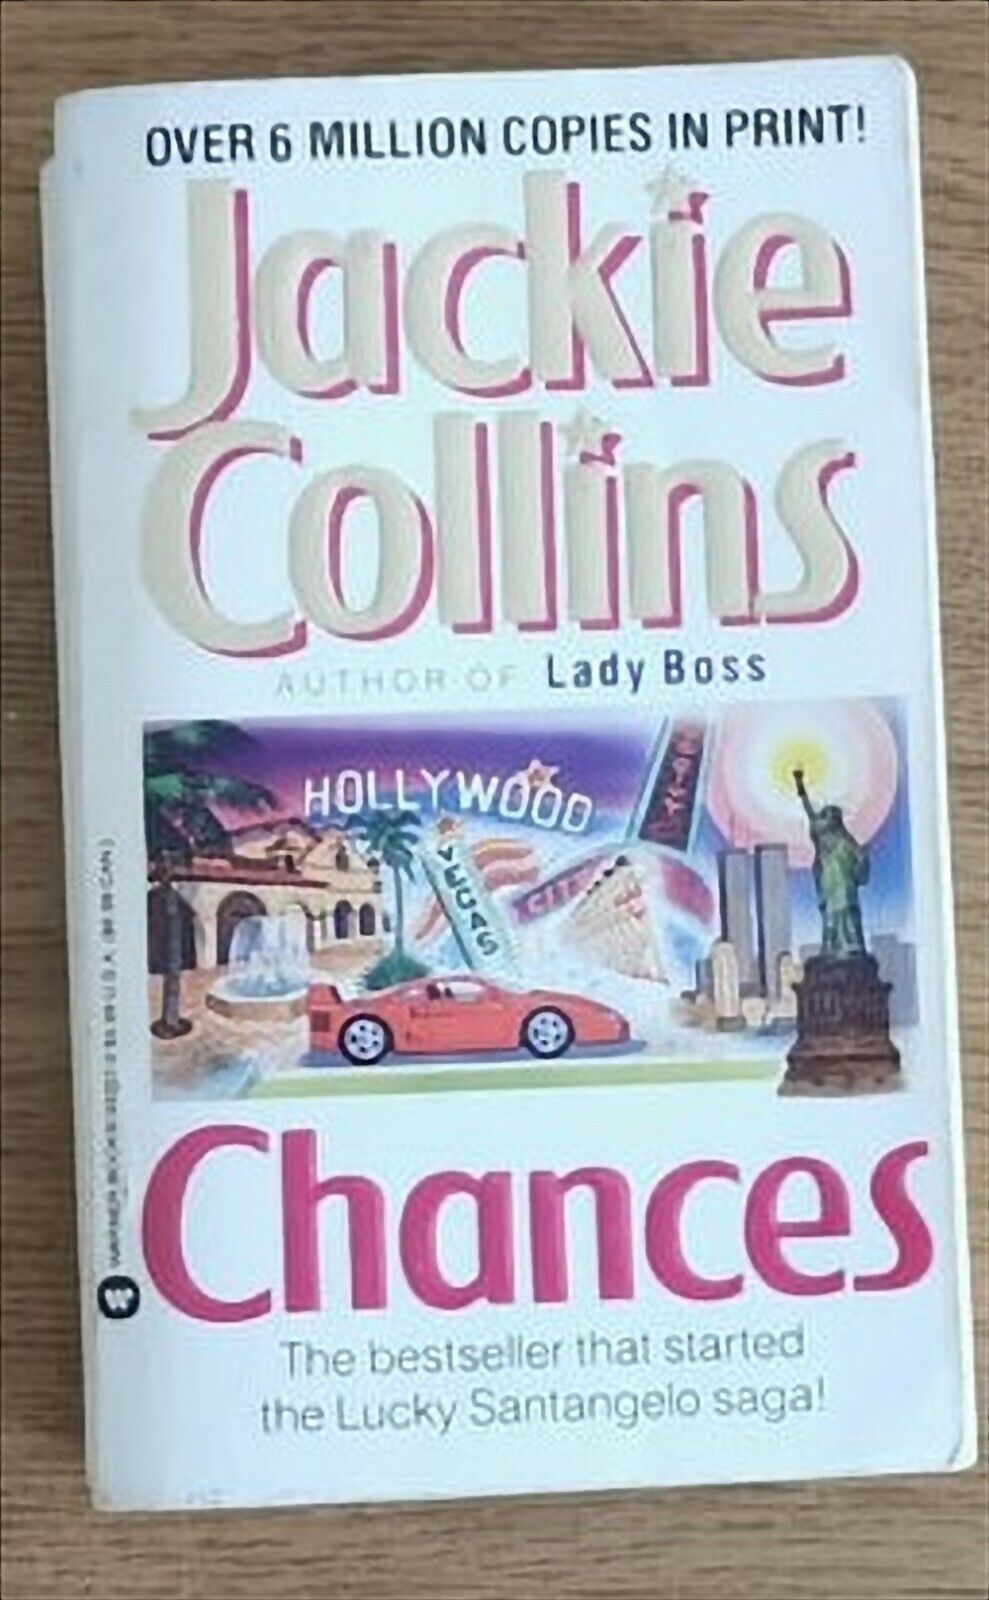 Chances - J. Collins - Warner books - 1981 - AR